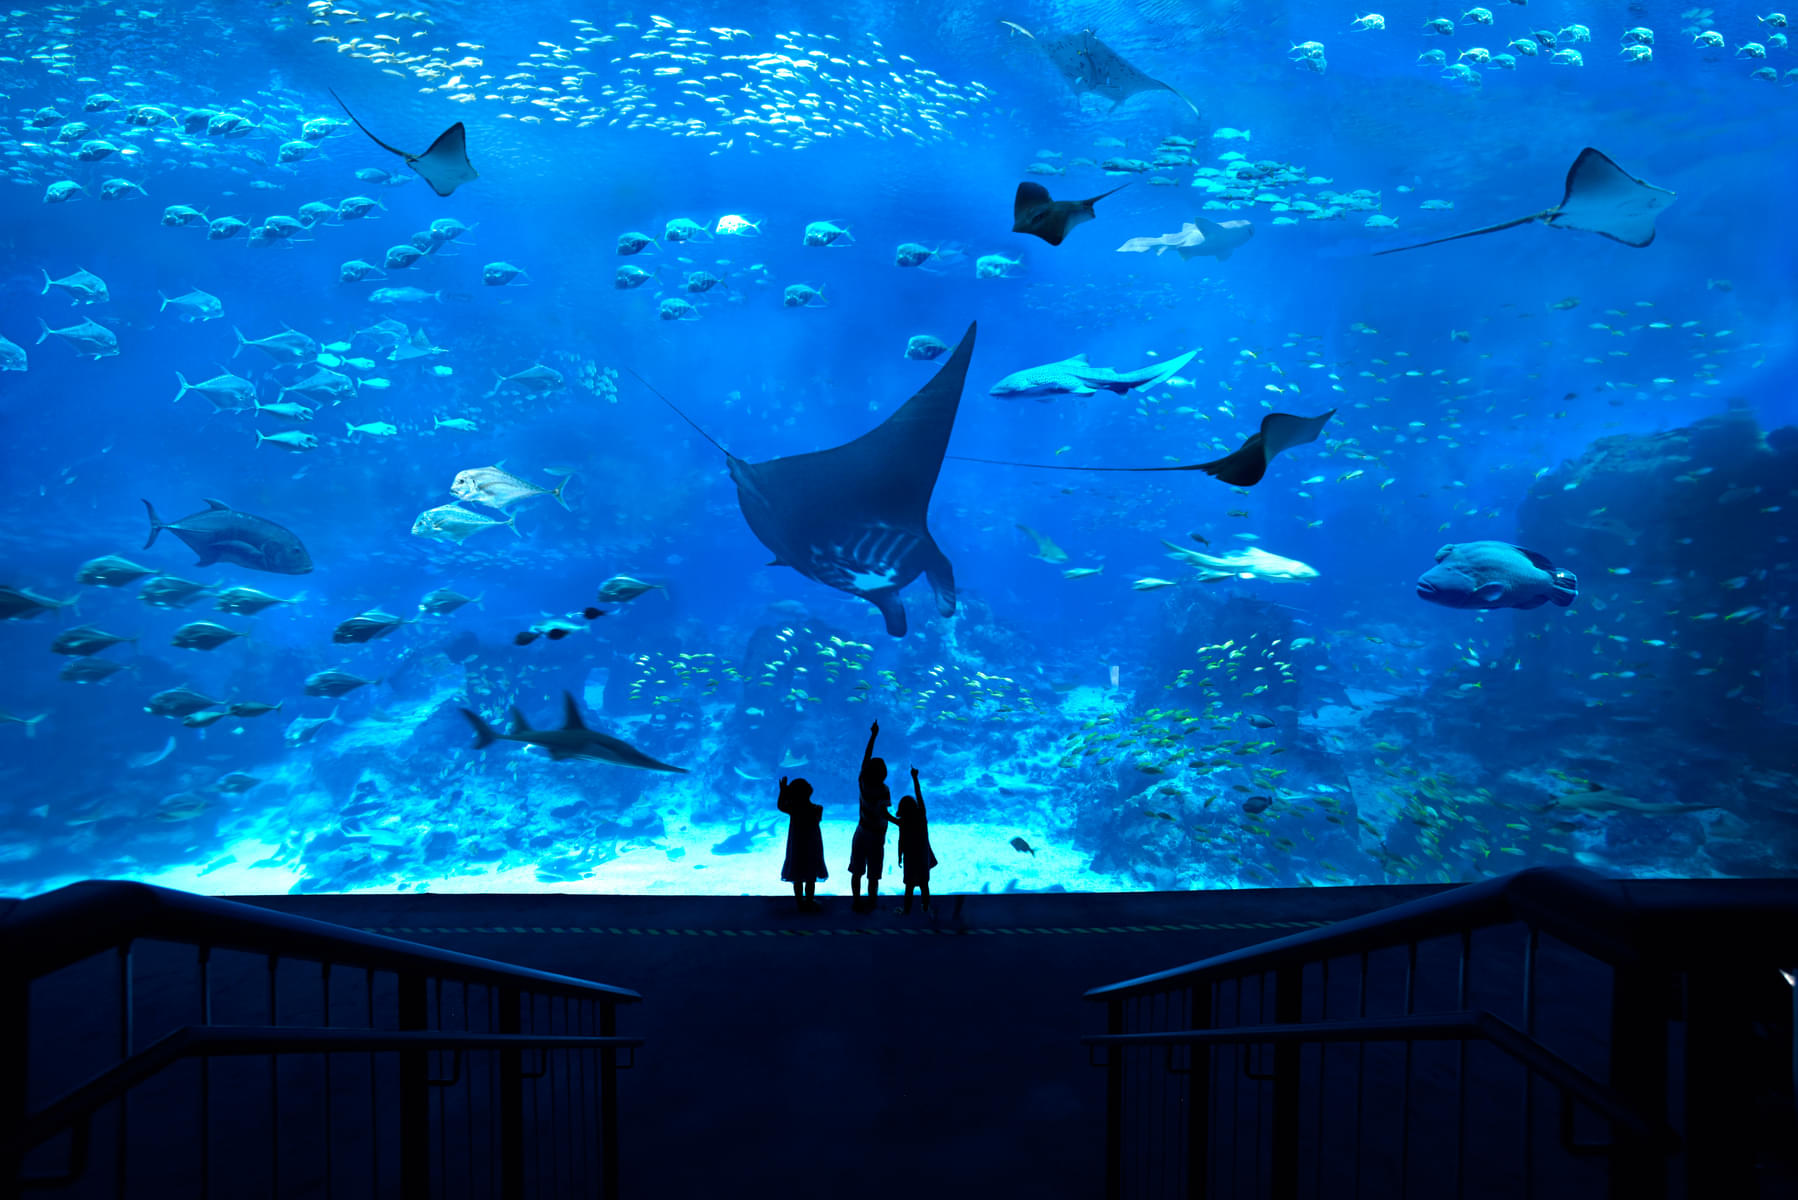 Be amazed by the wonderful Manta rays